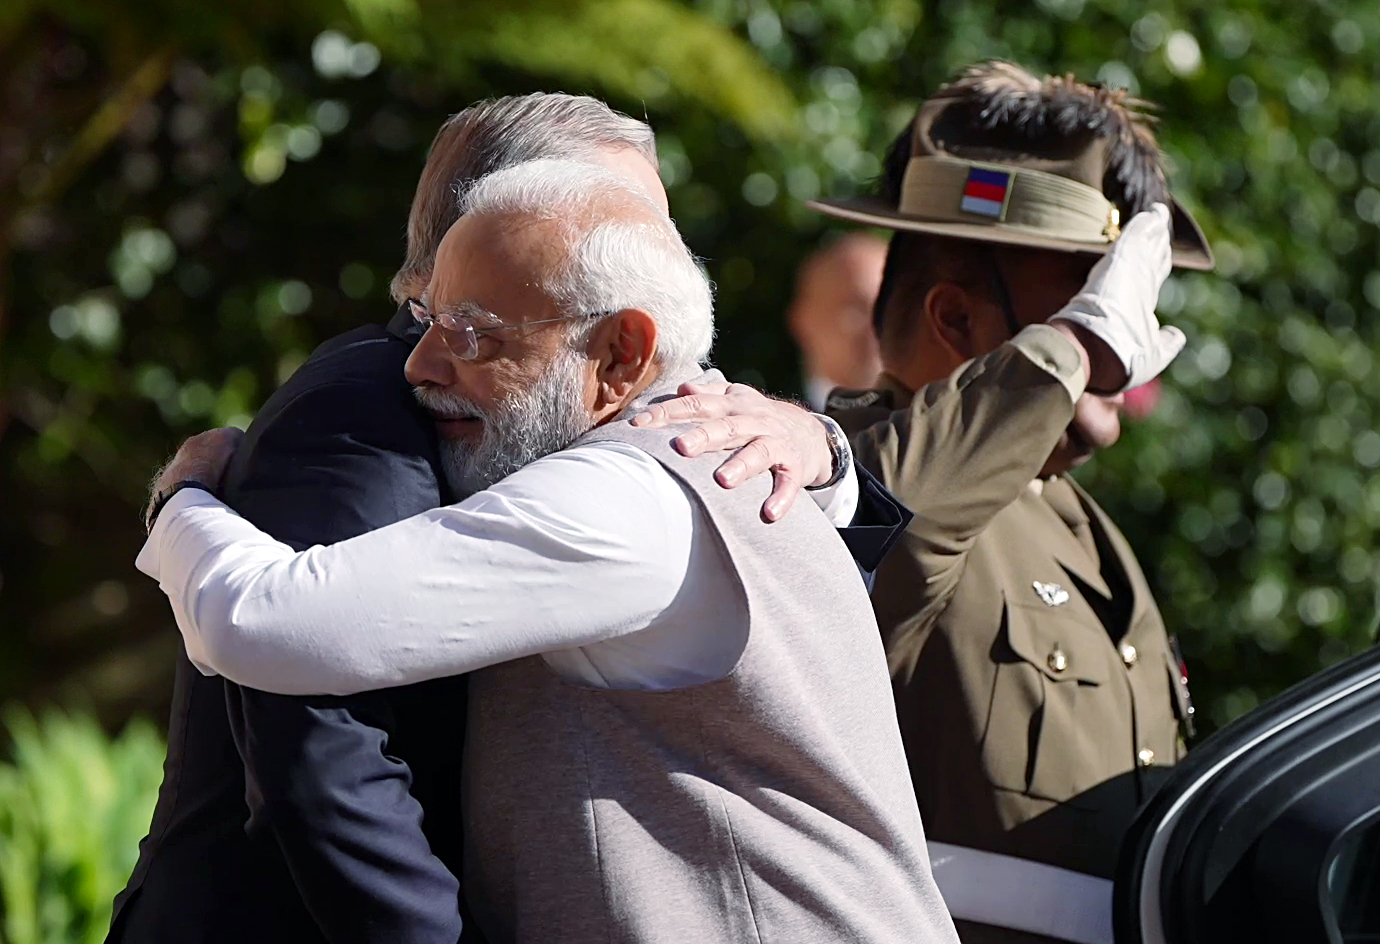 PM Narendra Modi launches India’s charm offensive Down Under